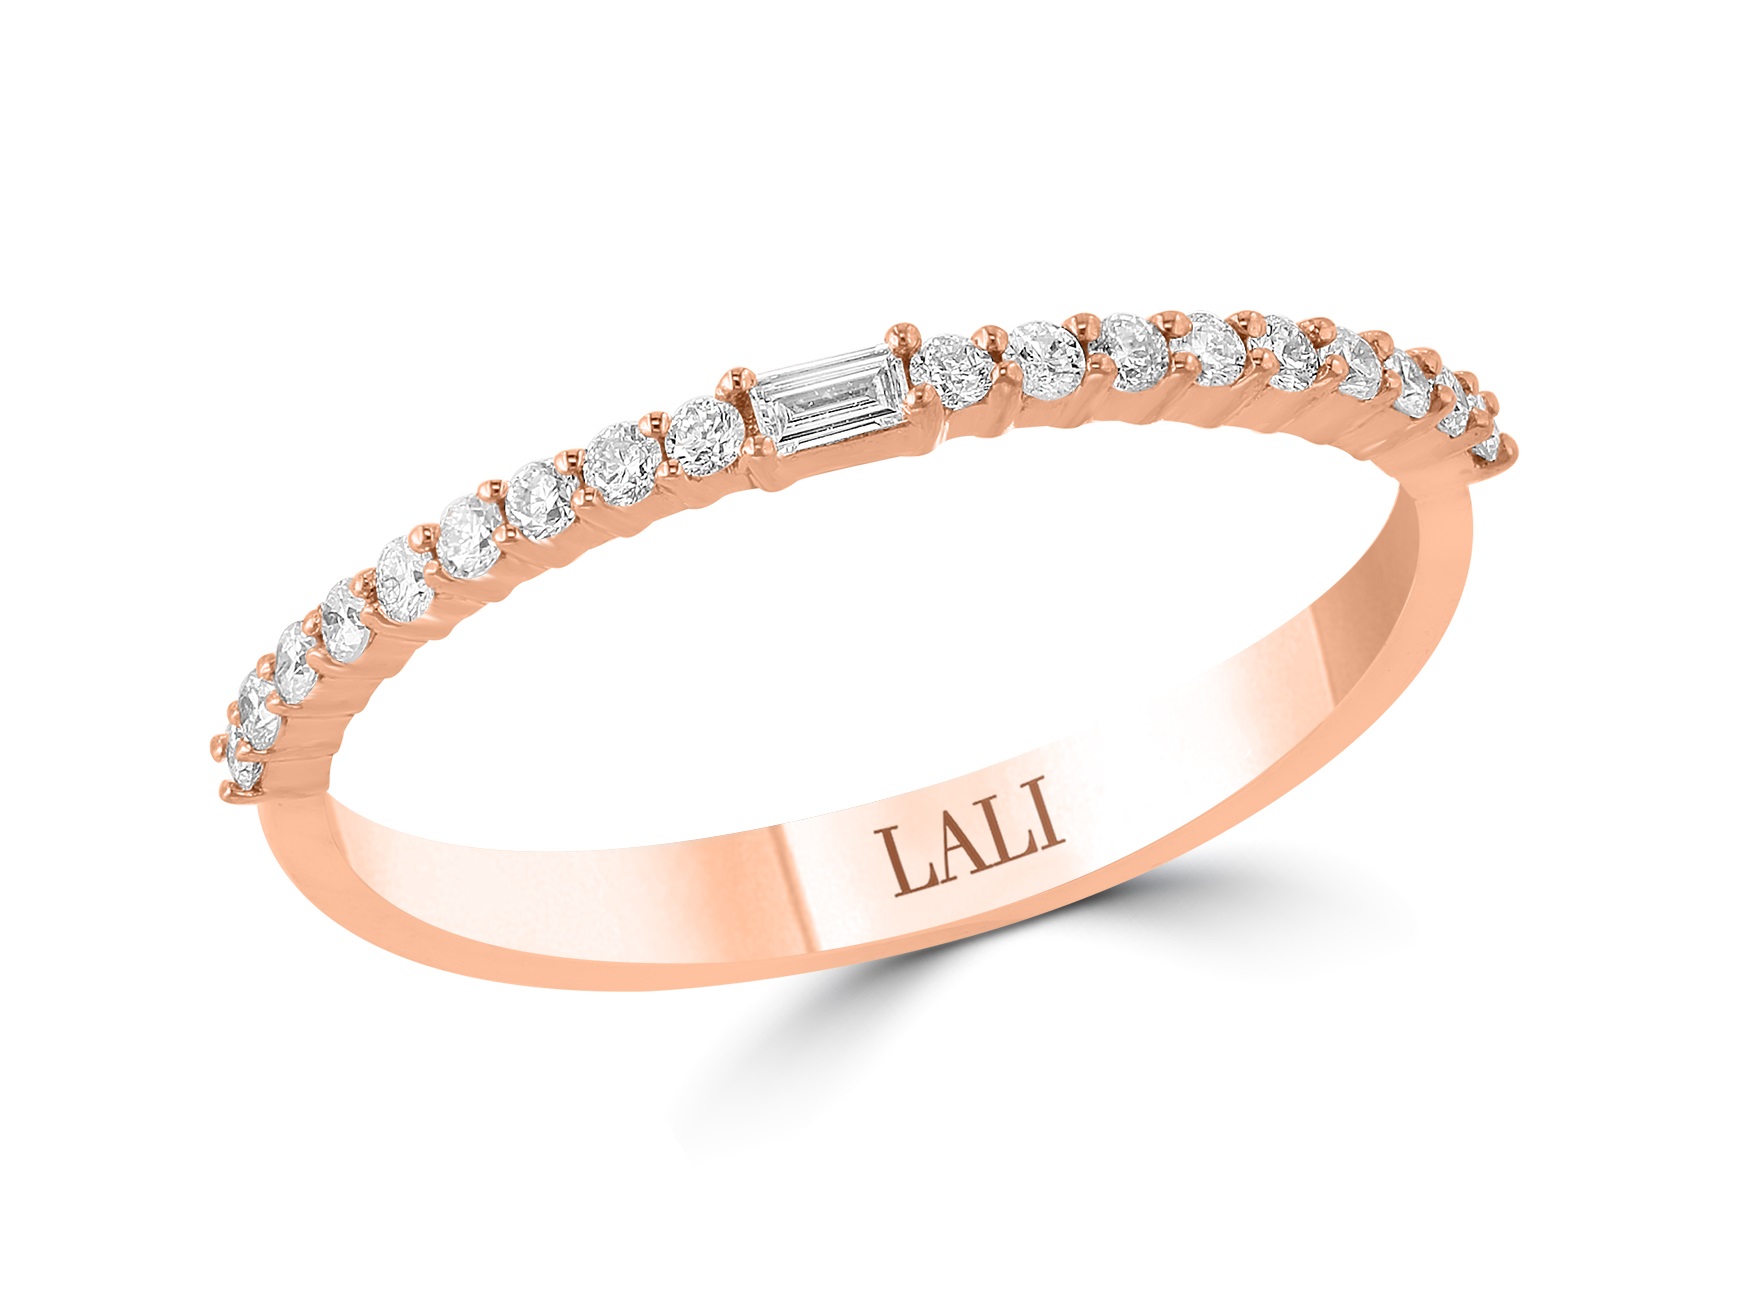 Lali 14 karat rose gold diamond full cut and baguette ring